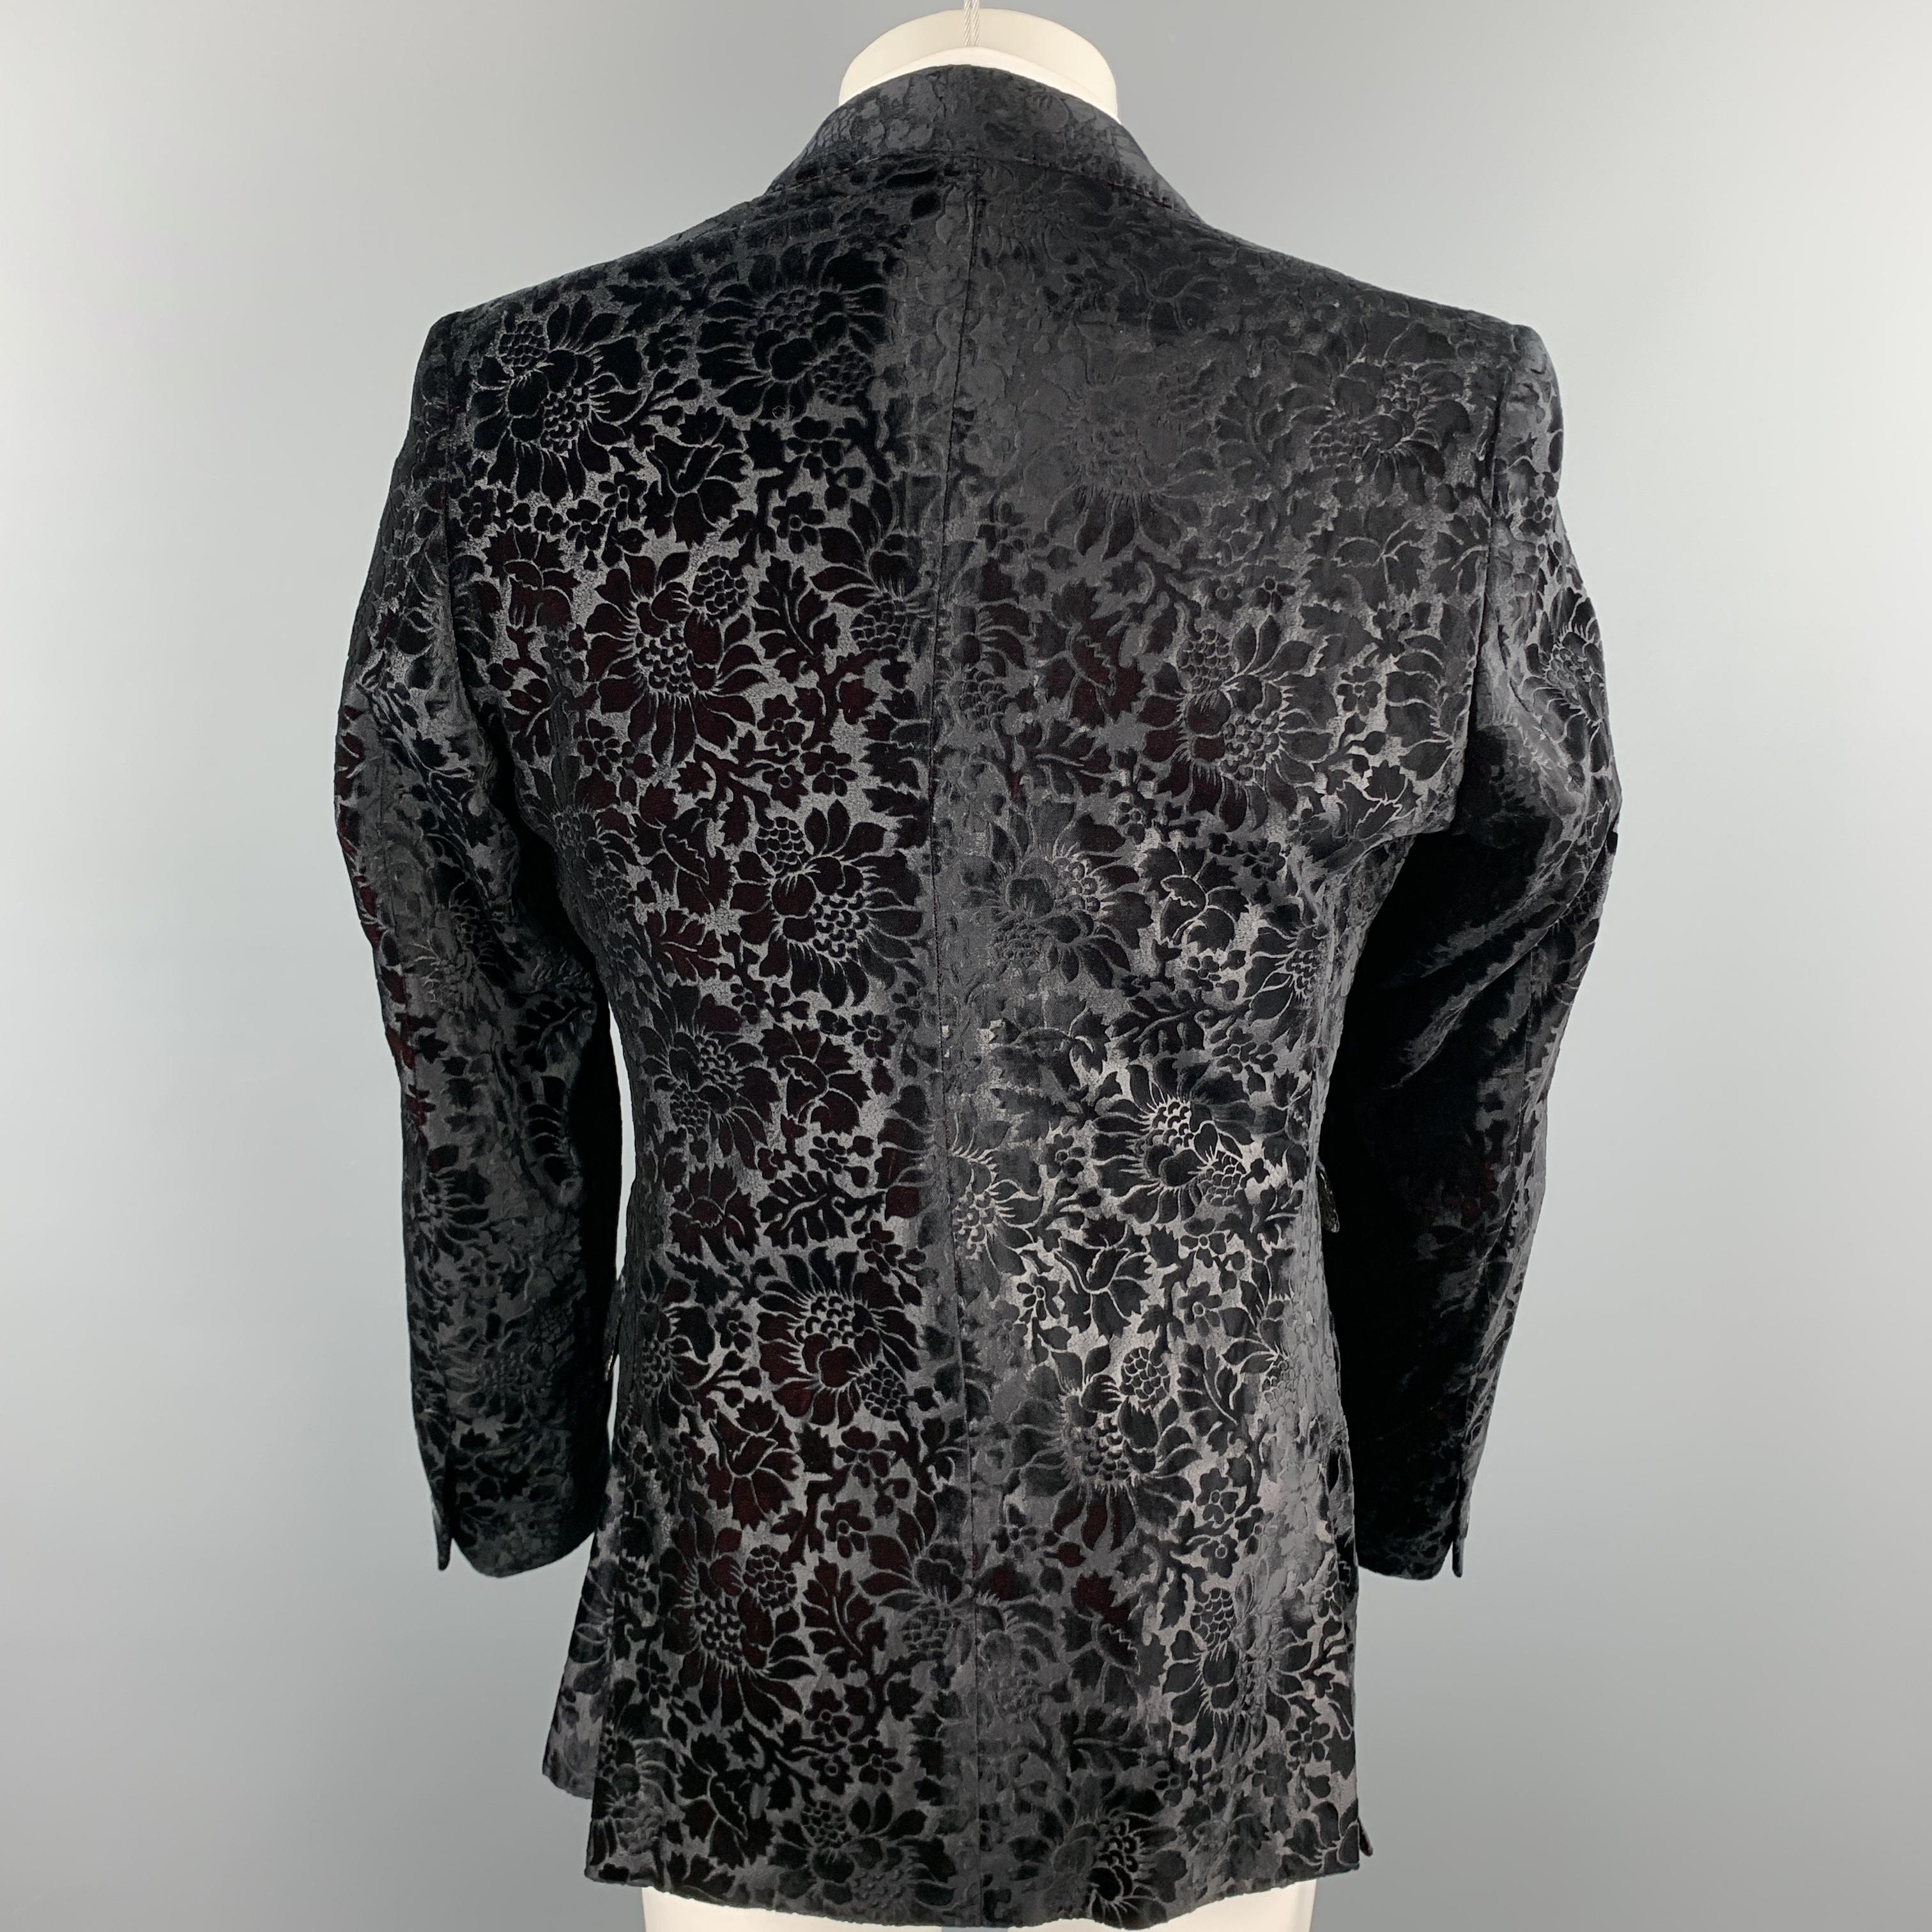 JUST CAVALLI Size 40 Black & Burgundy Floral Virgin Wool Sport Coat 3